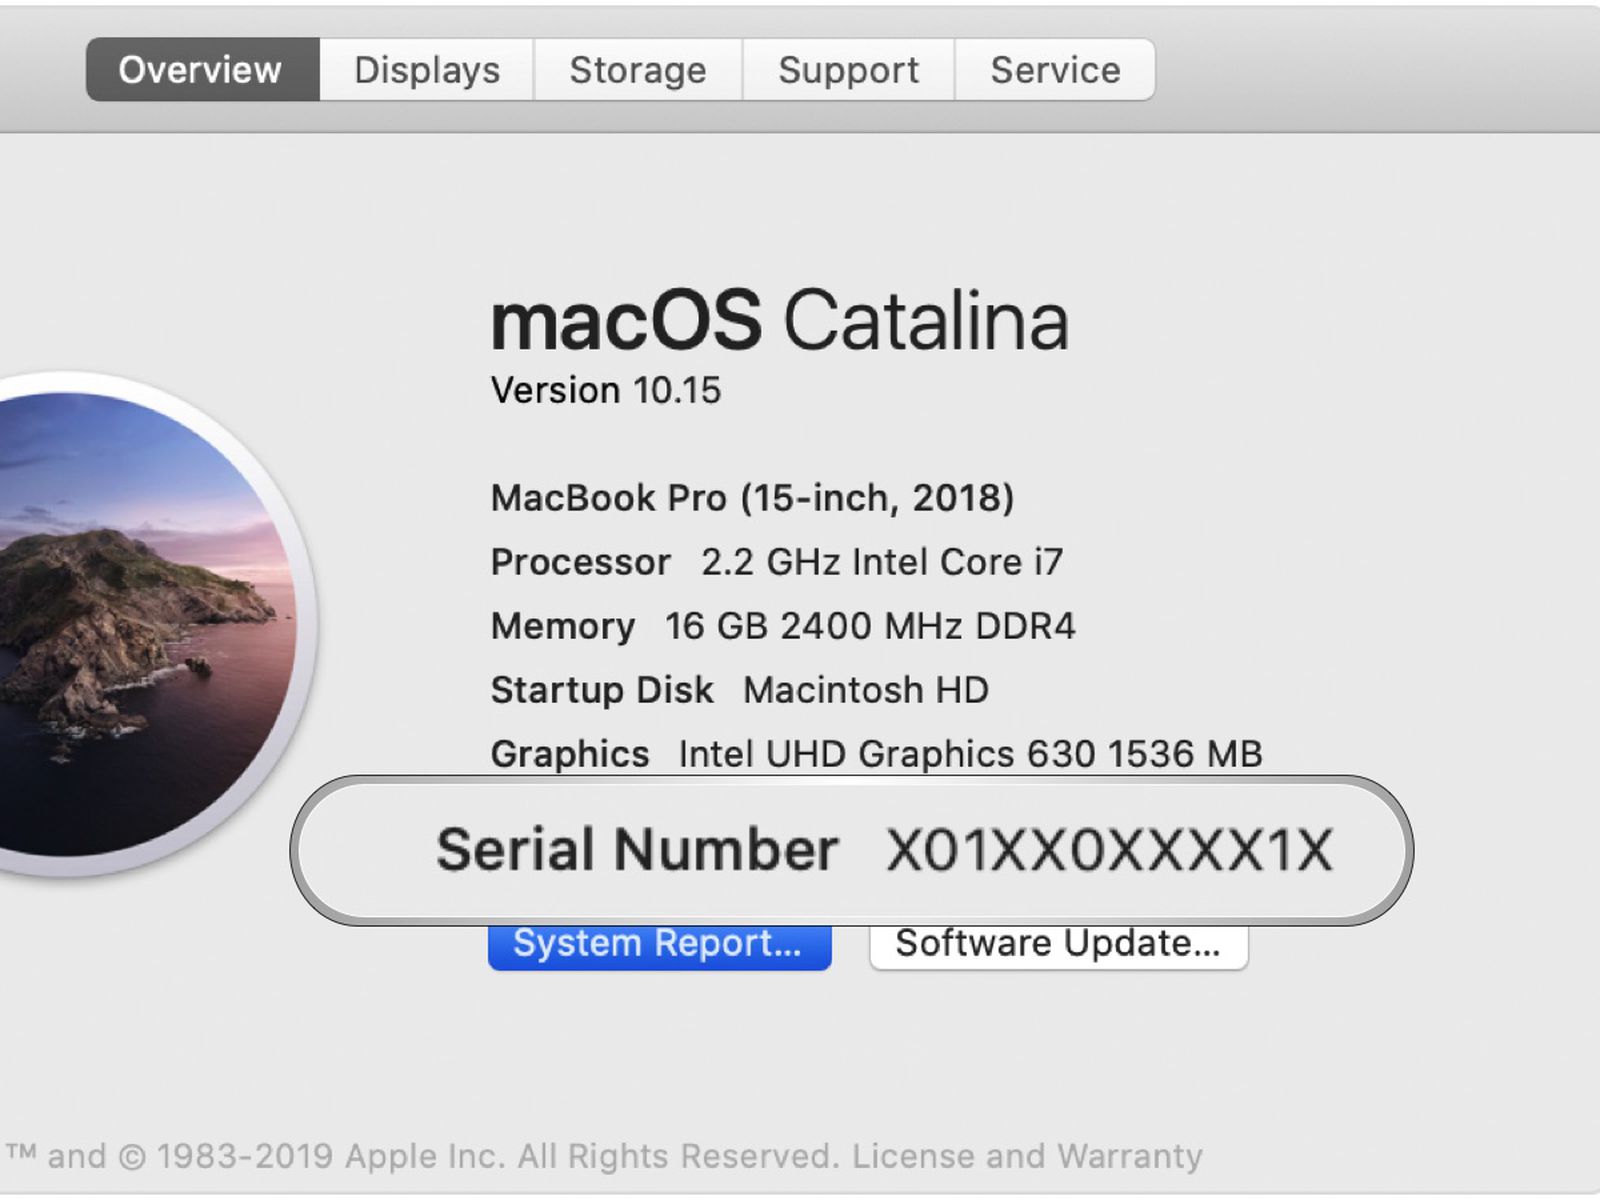 parallels desktop 13 for mac serial number